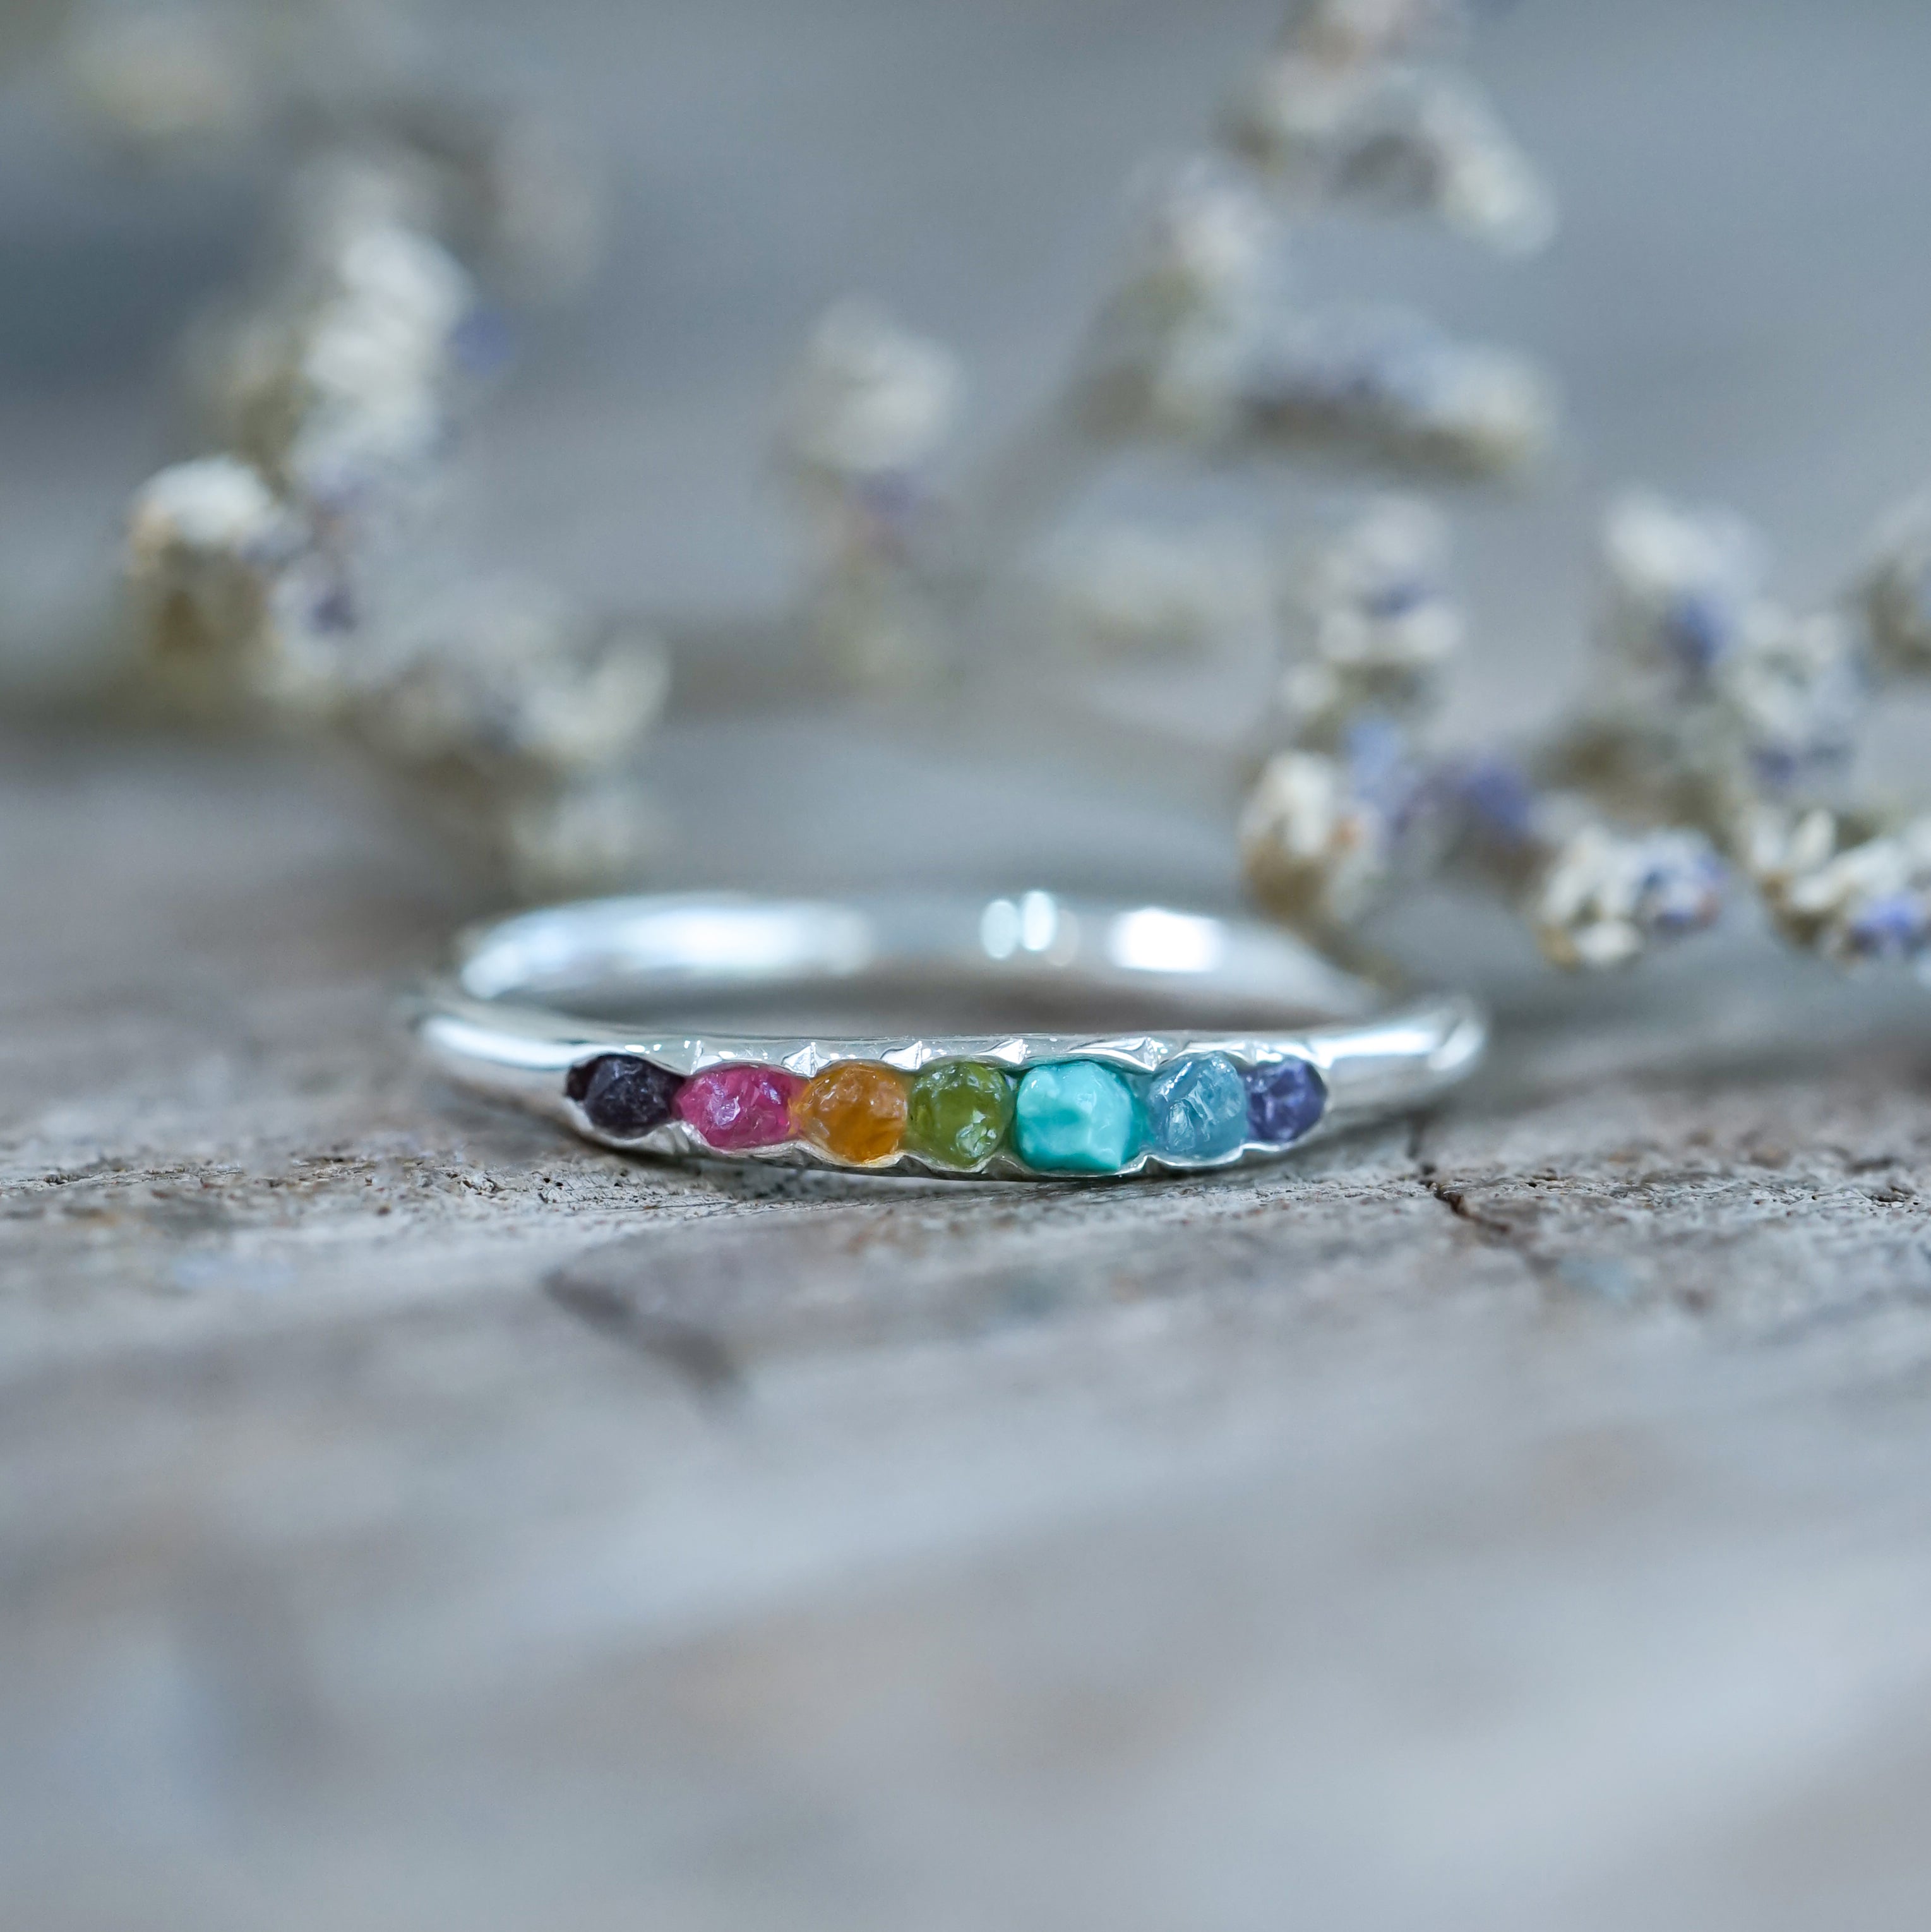 10 Pairs Double Sided Diamond Painting DIY Earring Making Kit (Rainbow)